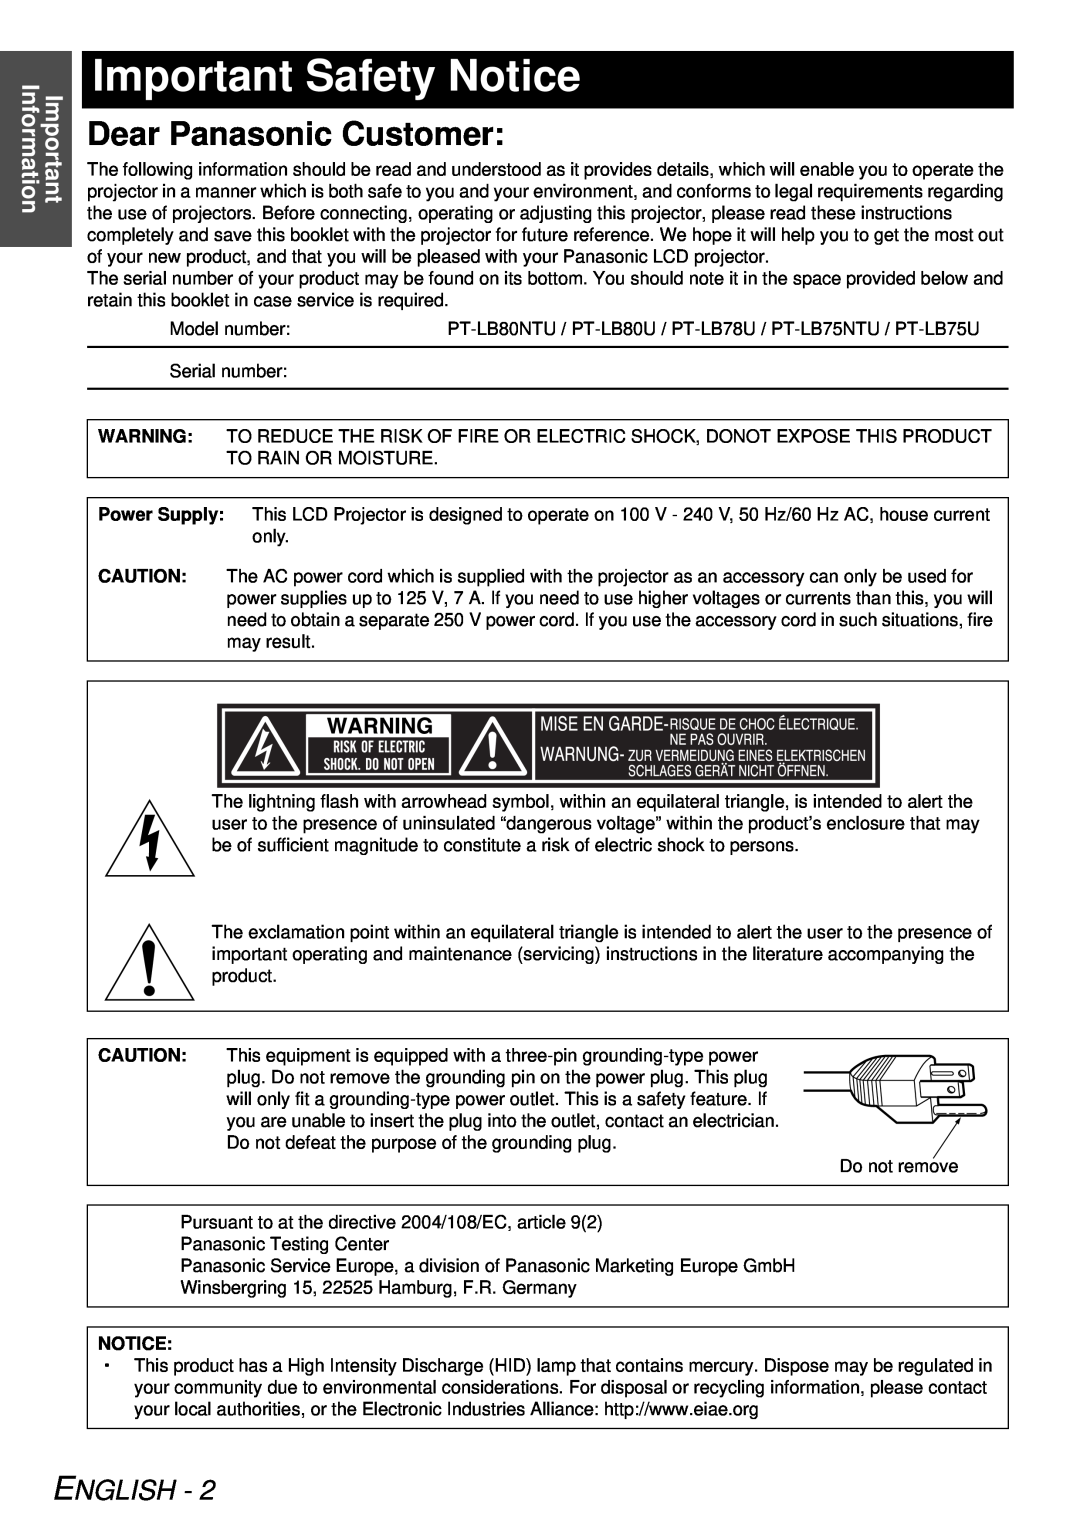 Panasonic PT-LB78U manual Important Safety Notice, Dear Panasonic Customer, English, Important Information 